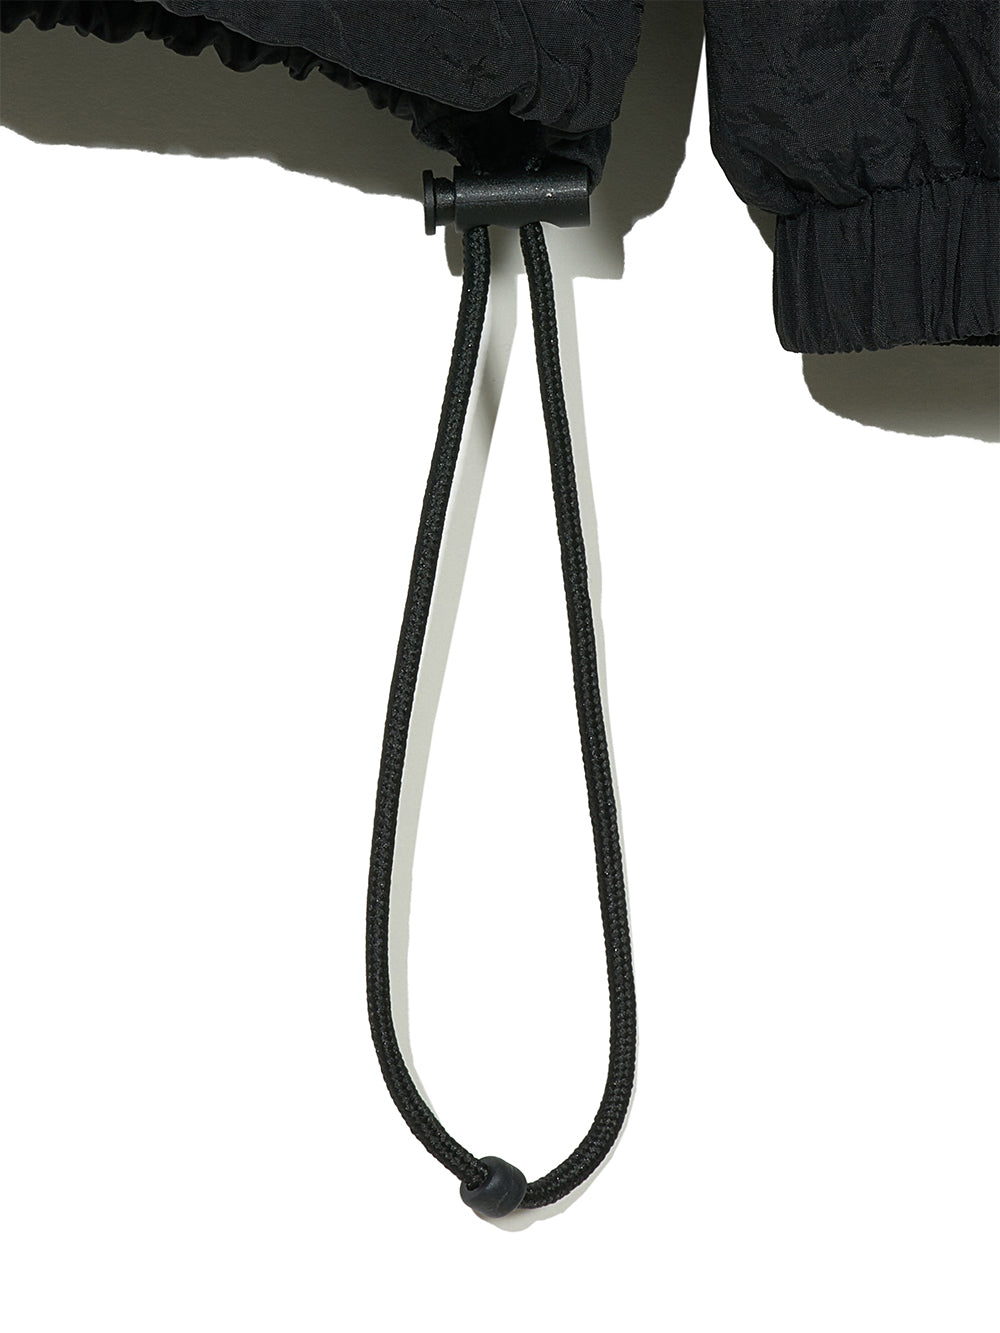 Curved Zipper Windbreaker Zip-up Jacket BLACK